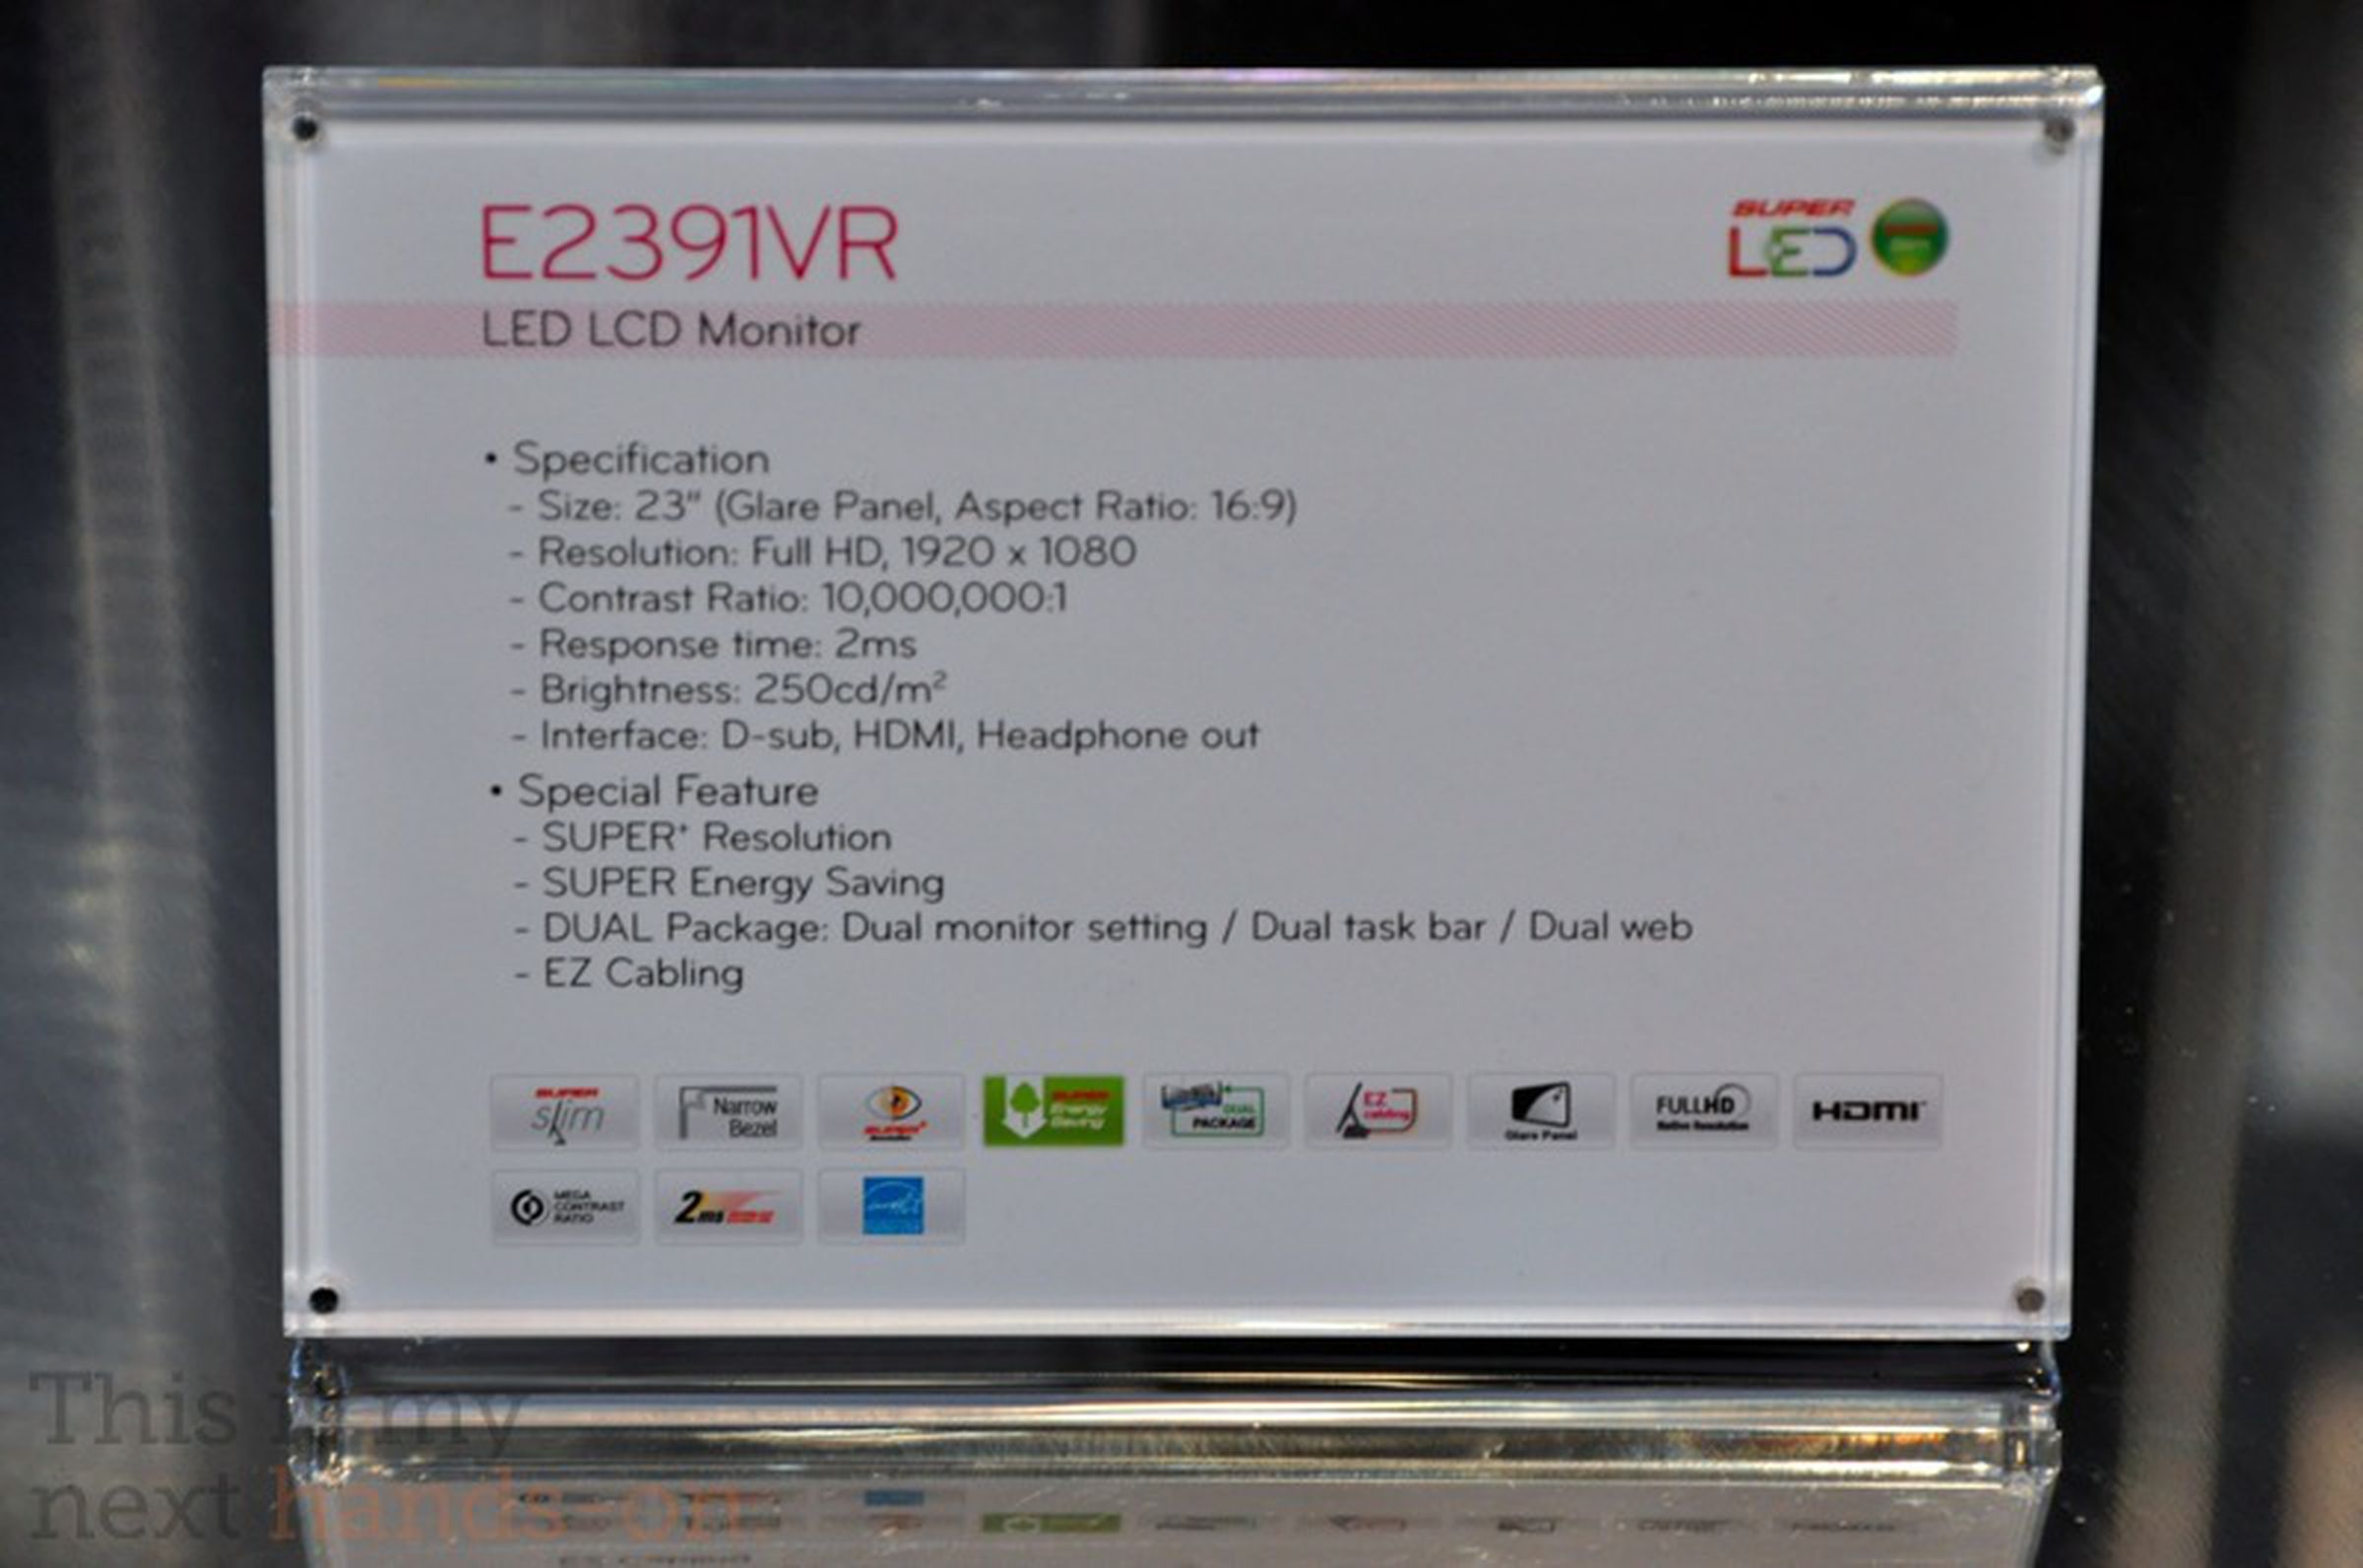 LG E2391VR monitor photos